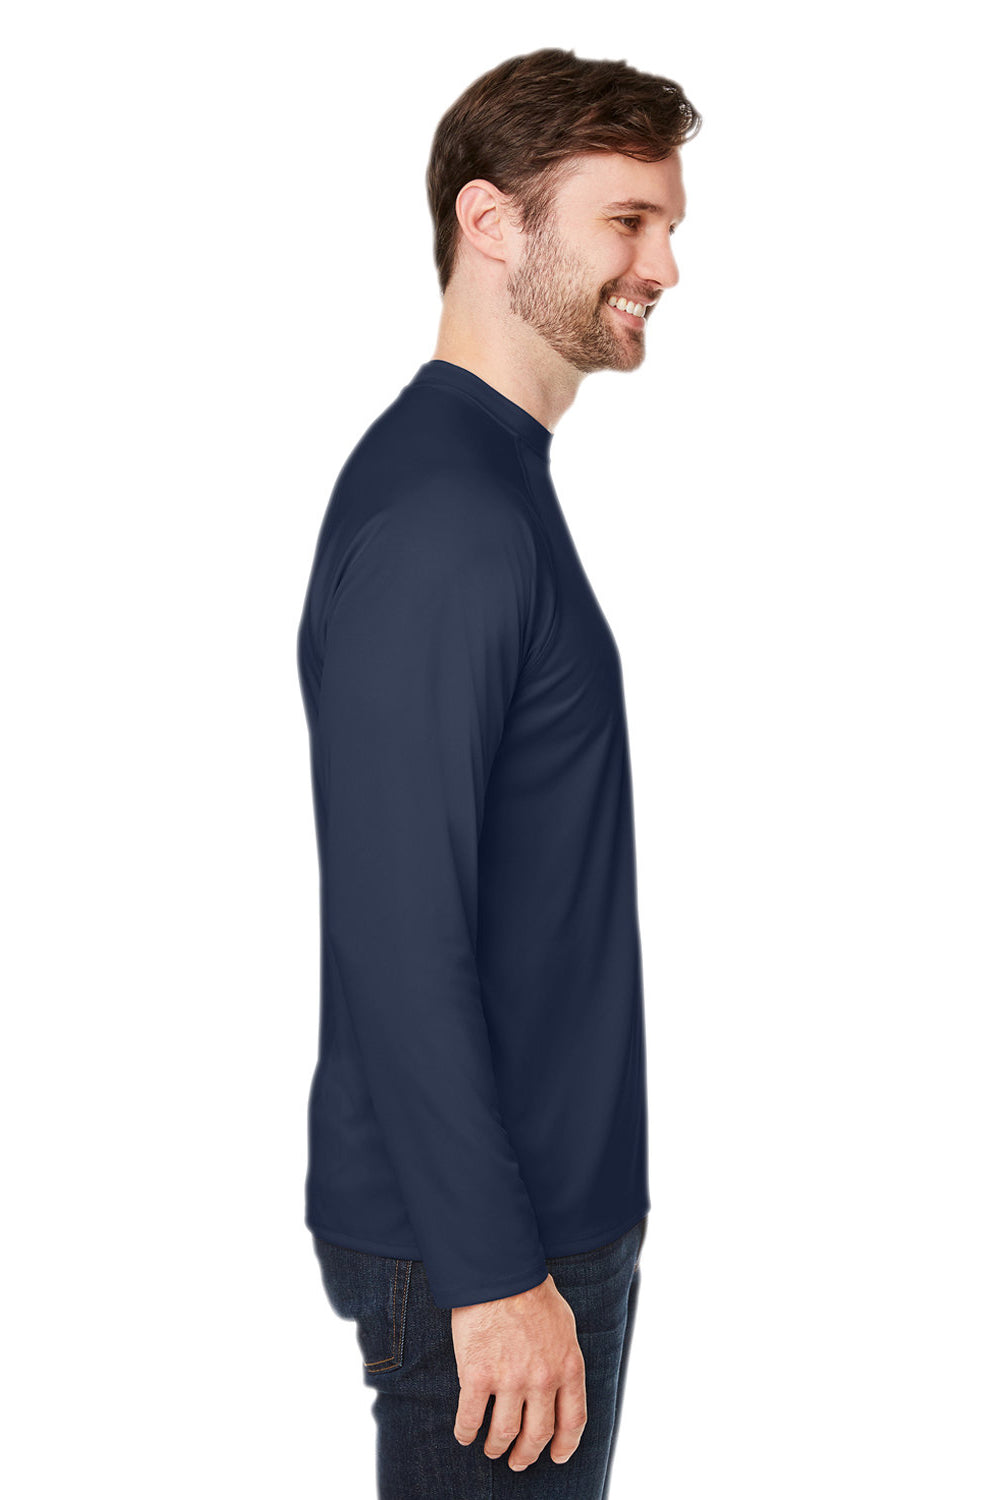 Core 365 CE110 Mens Ultra MVP Raglan Long Sleeve T-Shirt Classic Navy Blue Side